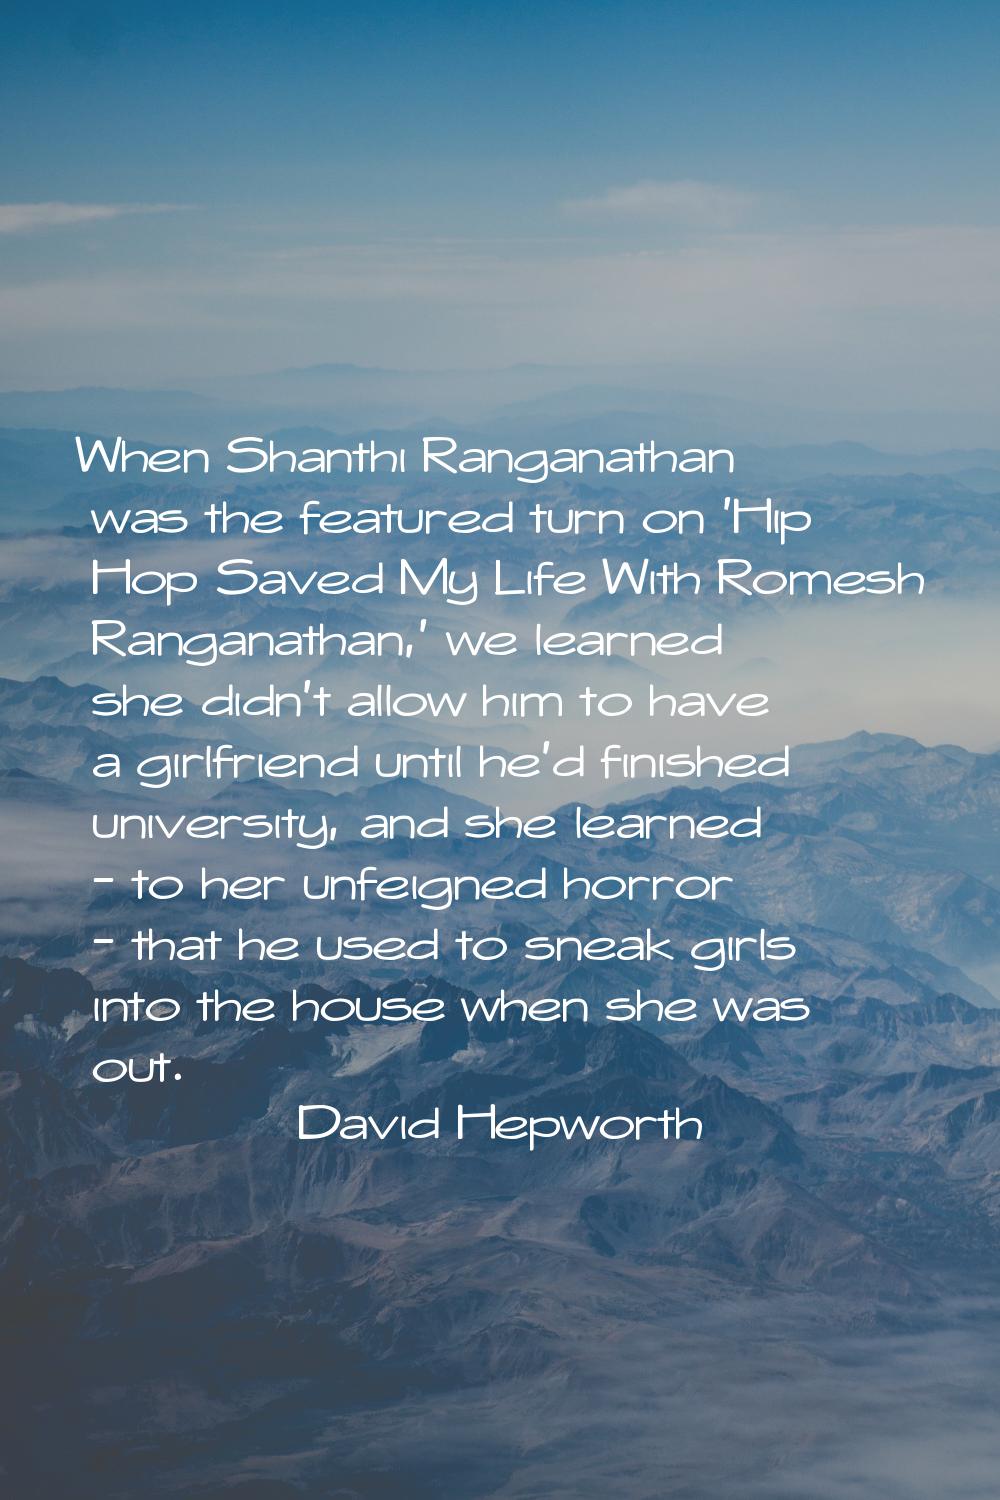 When Shanthi Ranganathan was the featured turn on 'Hip Hop Saved My Life With Romesh Ranganathan,' 